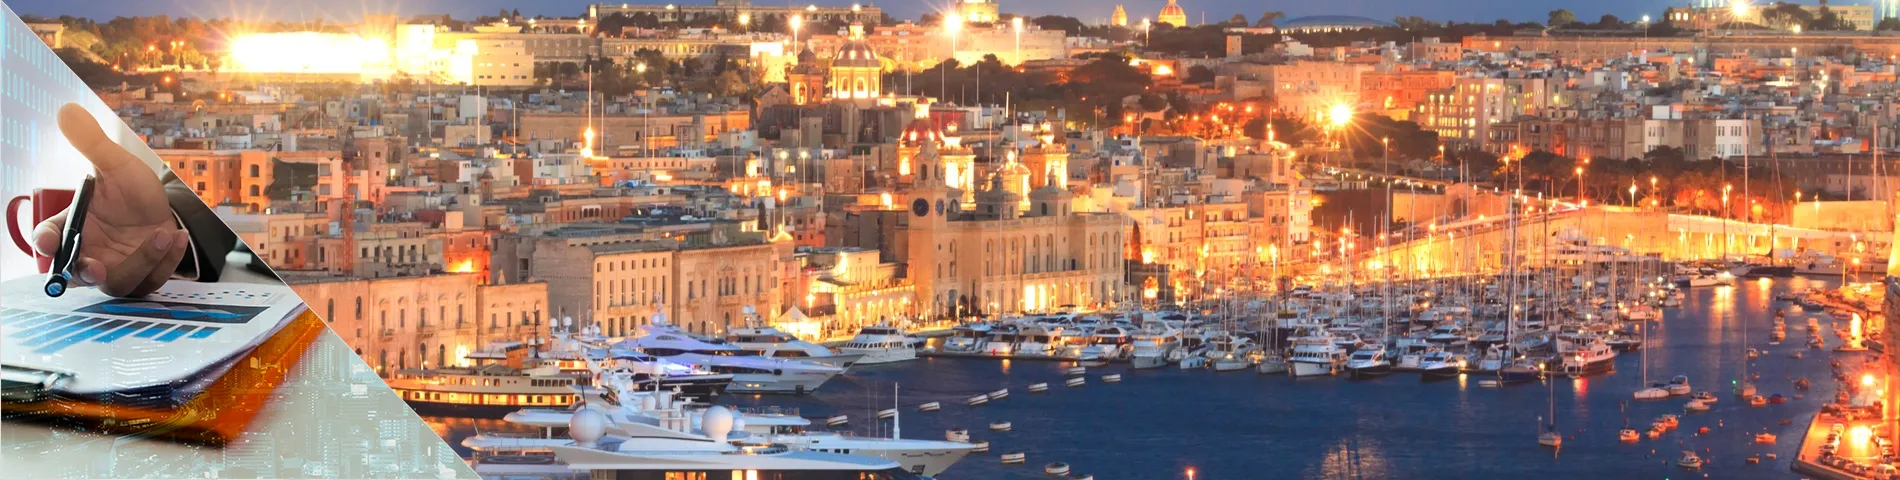 Valletta - Bankowość i Finanse